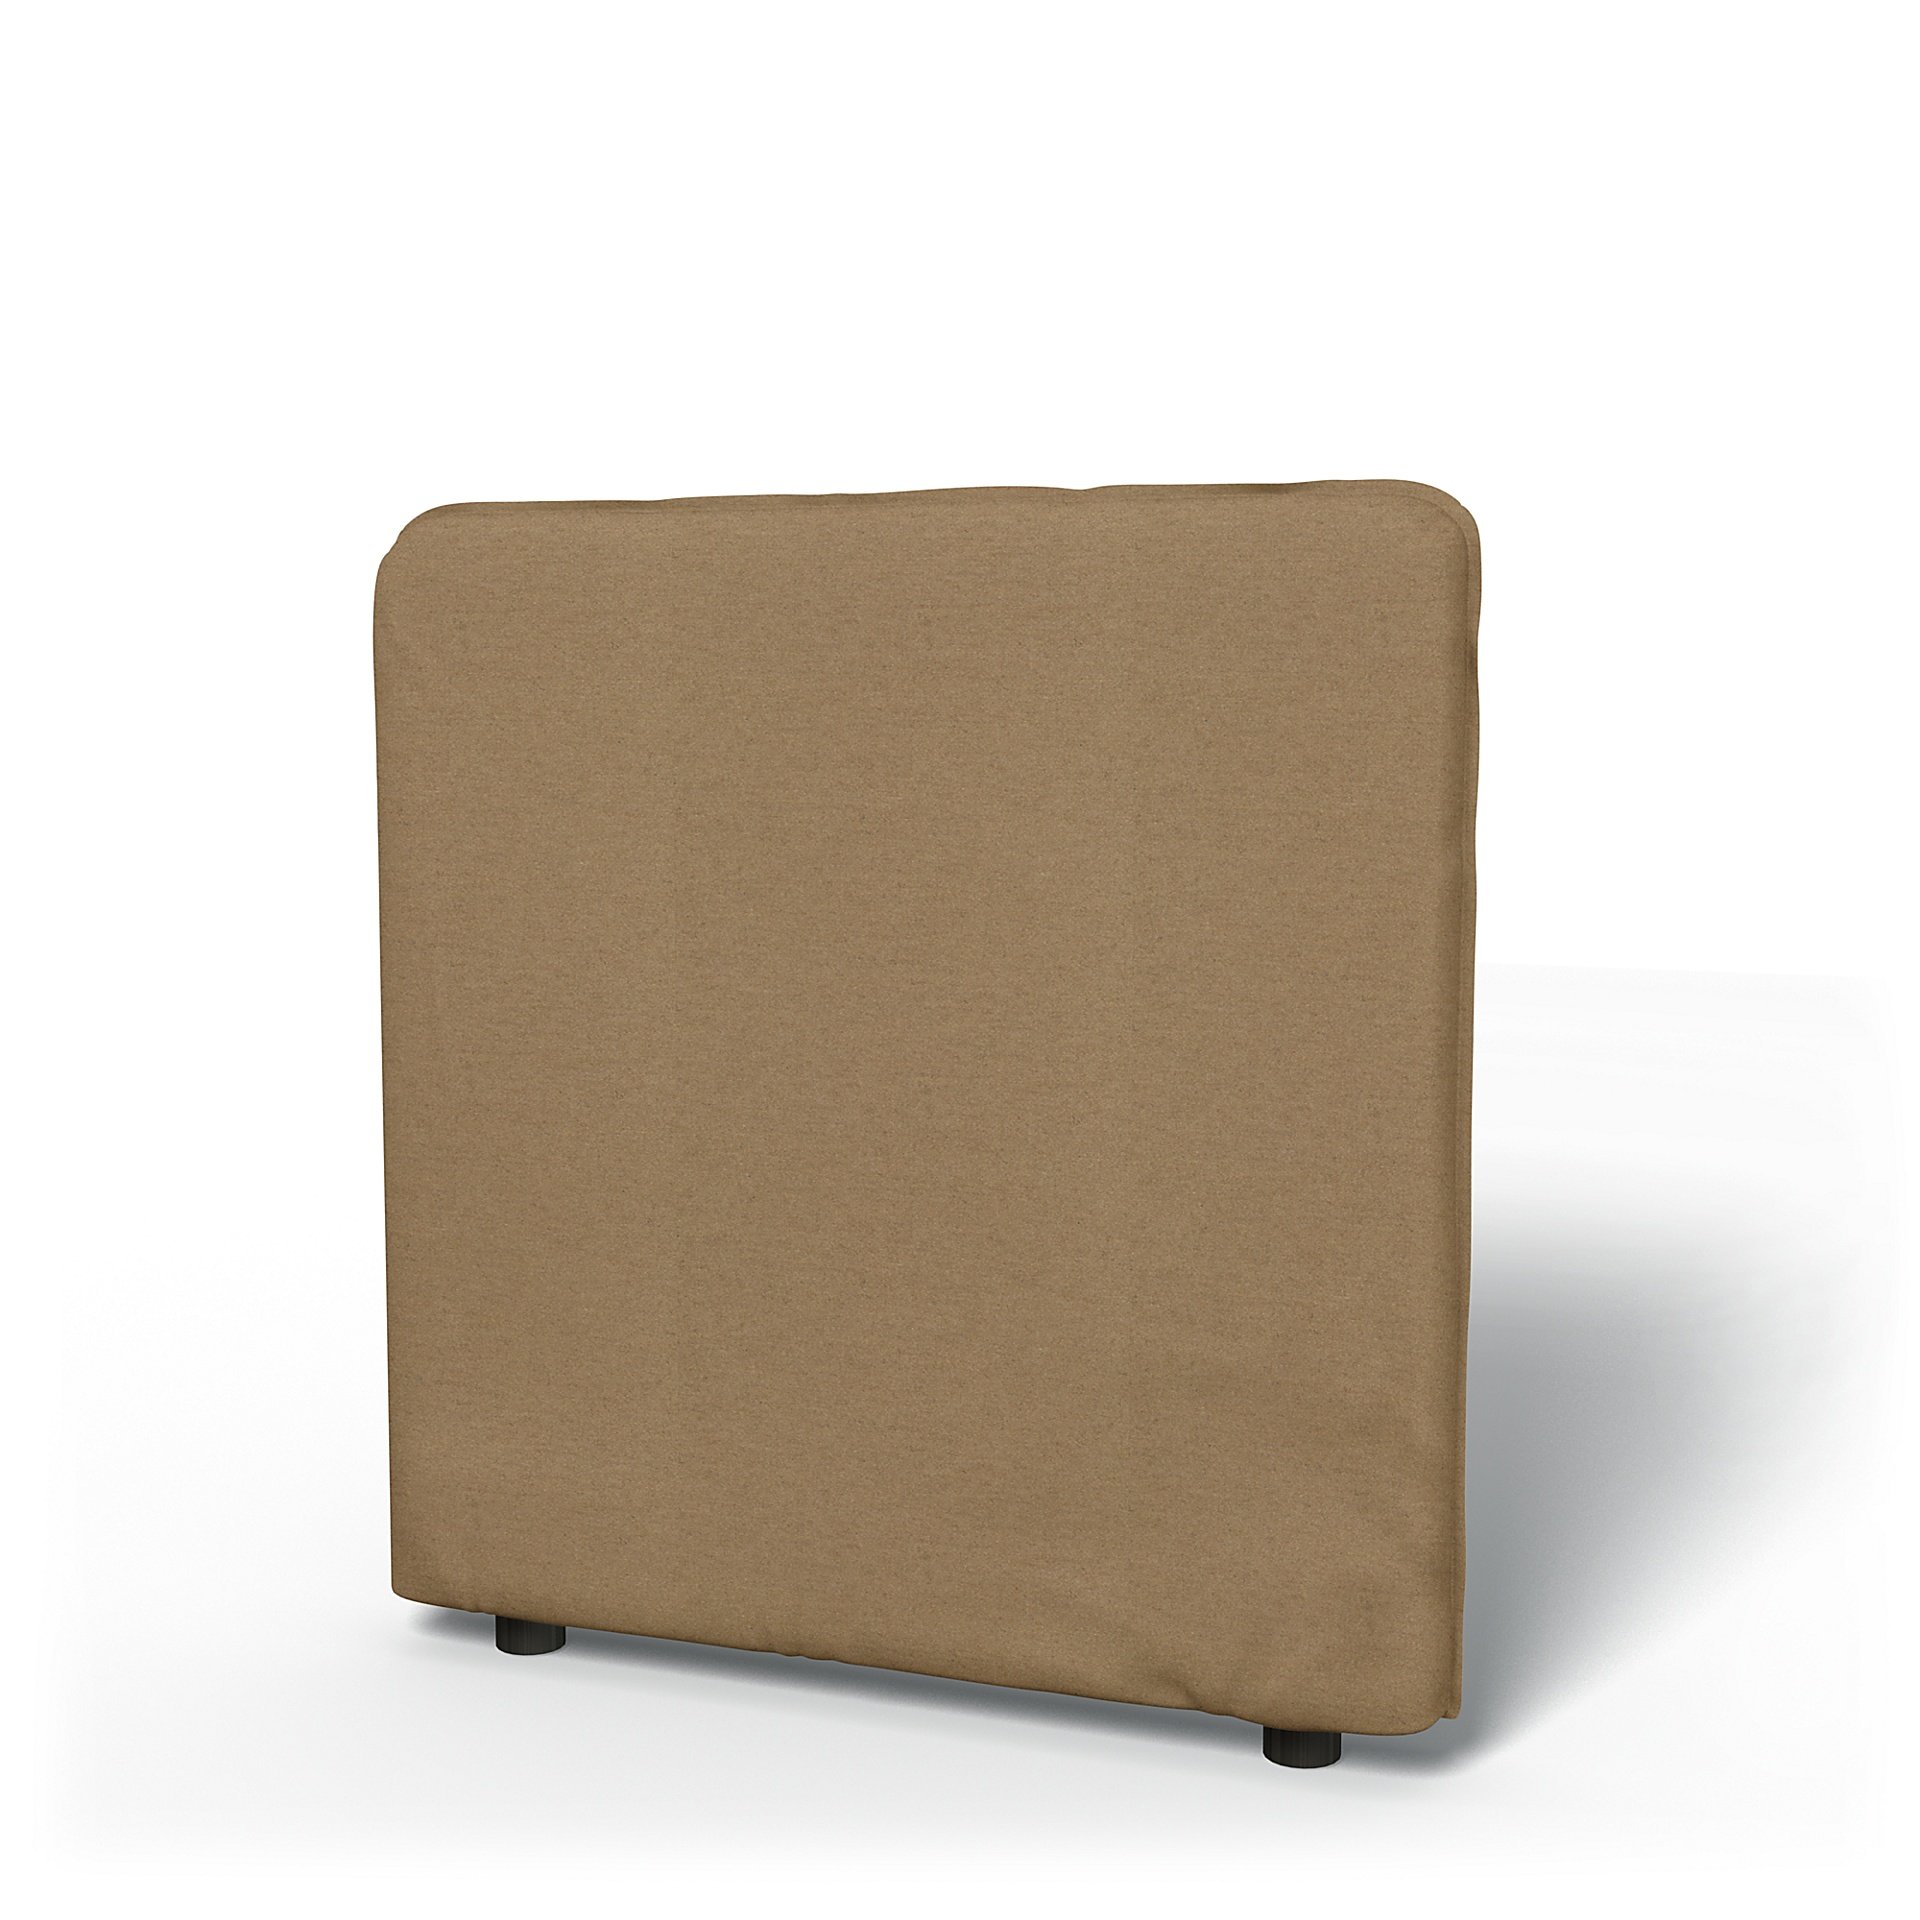 IKEA - Vallentuna Low Backrest Cover 80x80cm 32x32in, Sand, Wool - Bemz